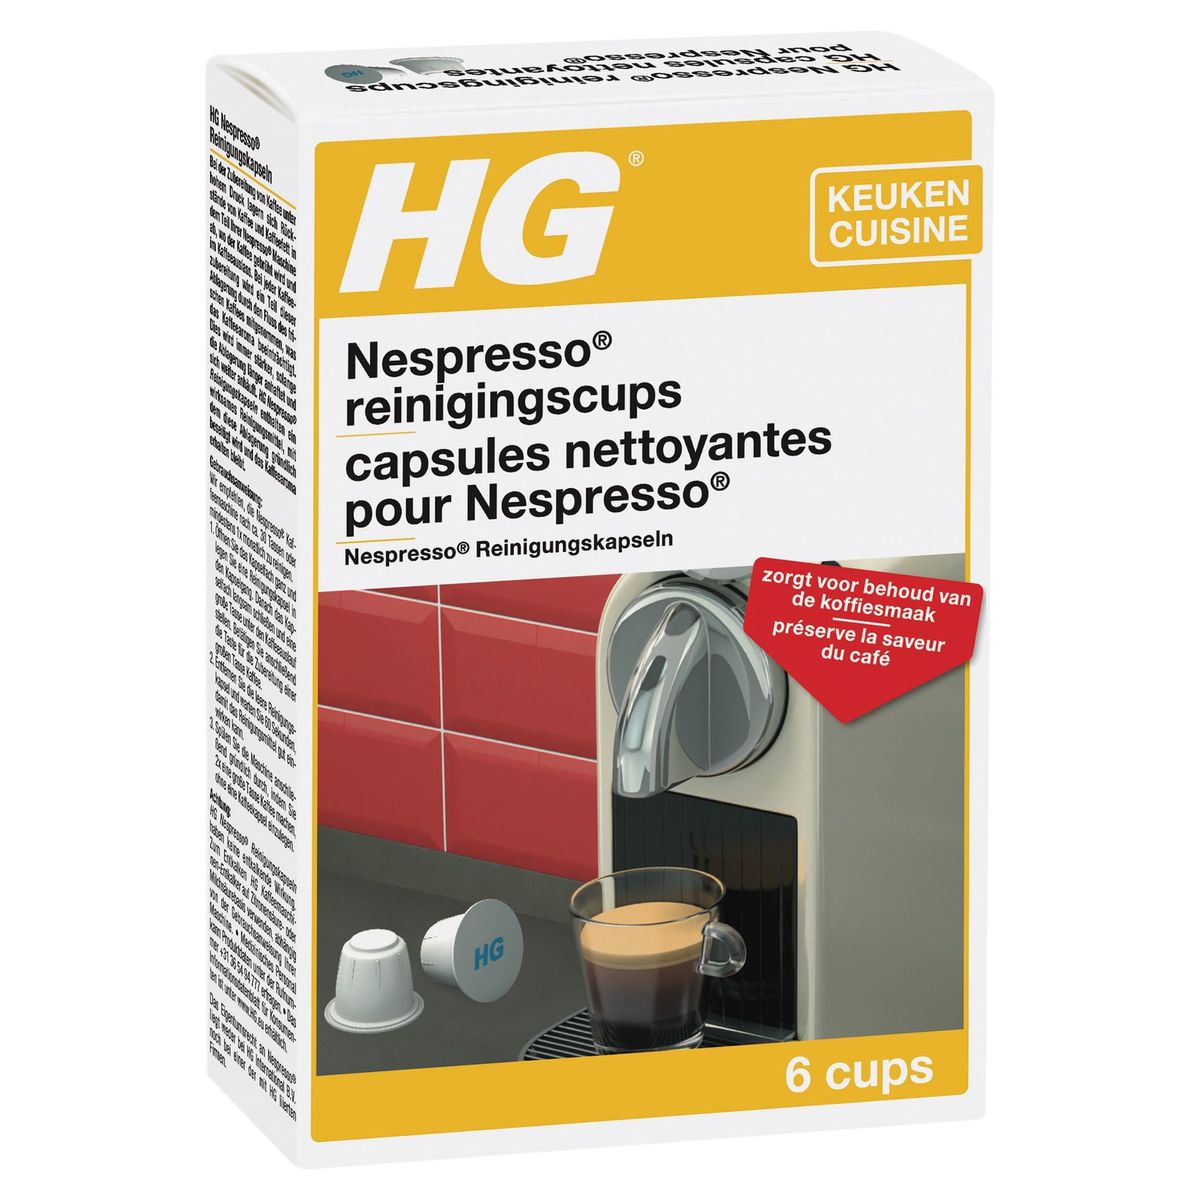 HG Capsules Nettoyantes pour les Machines Nespresso 6 x 3 g